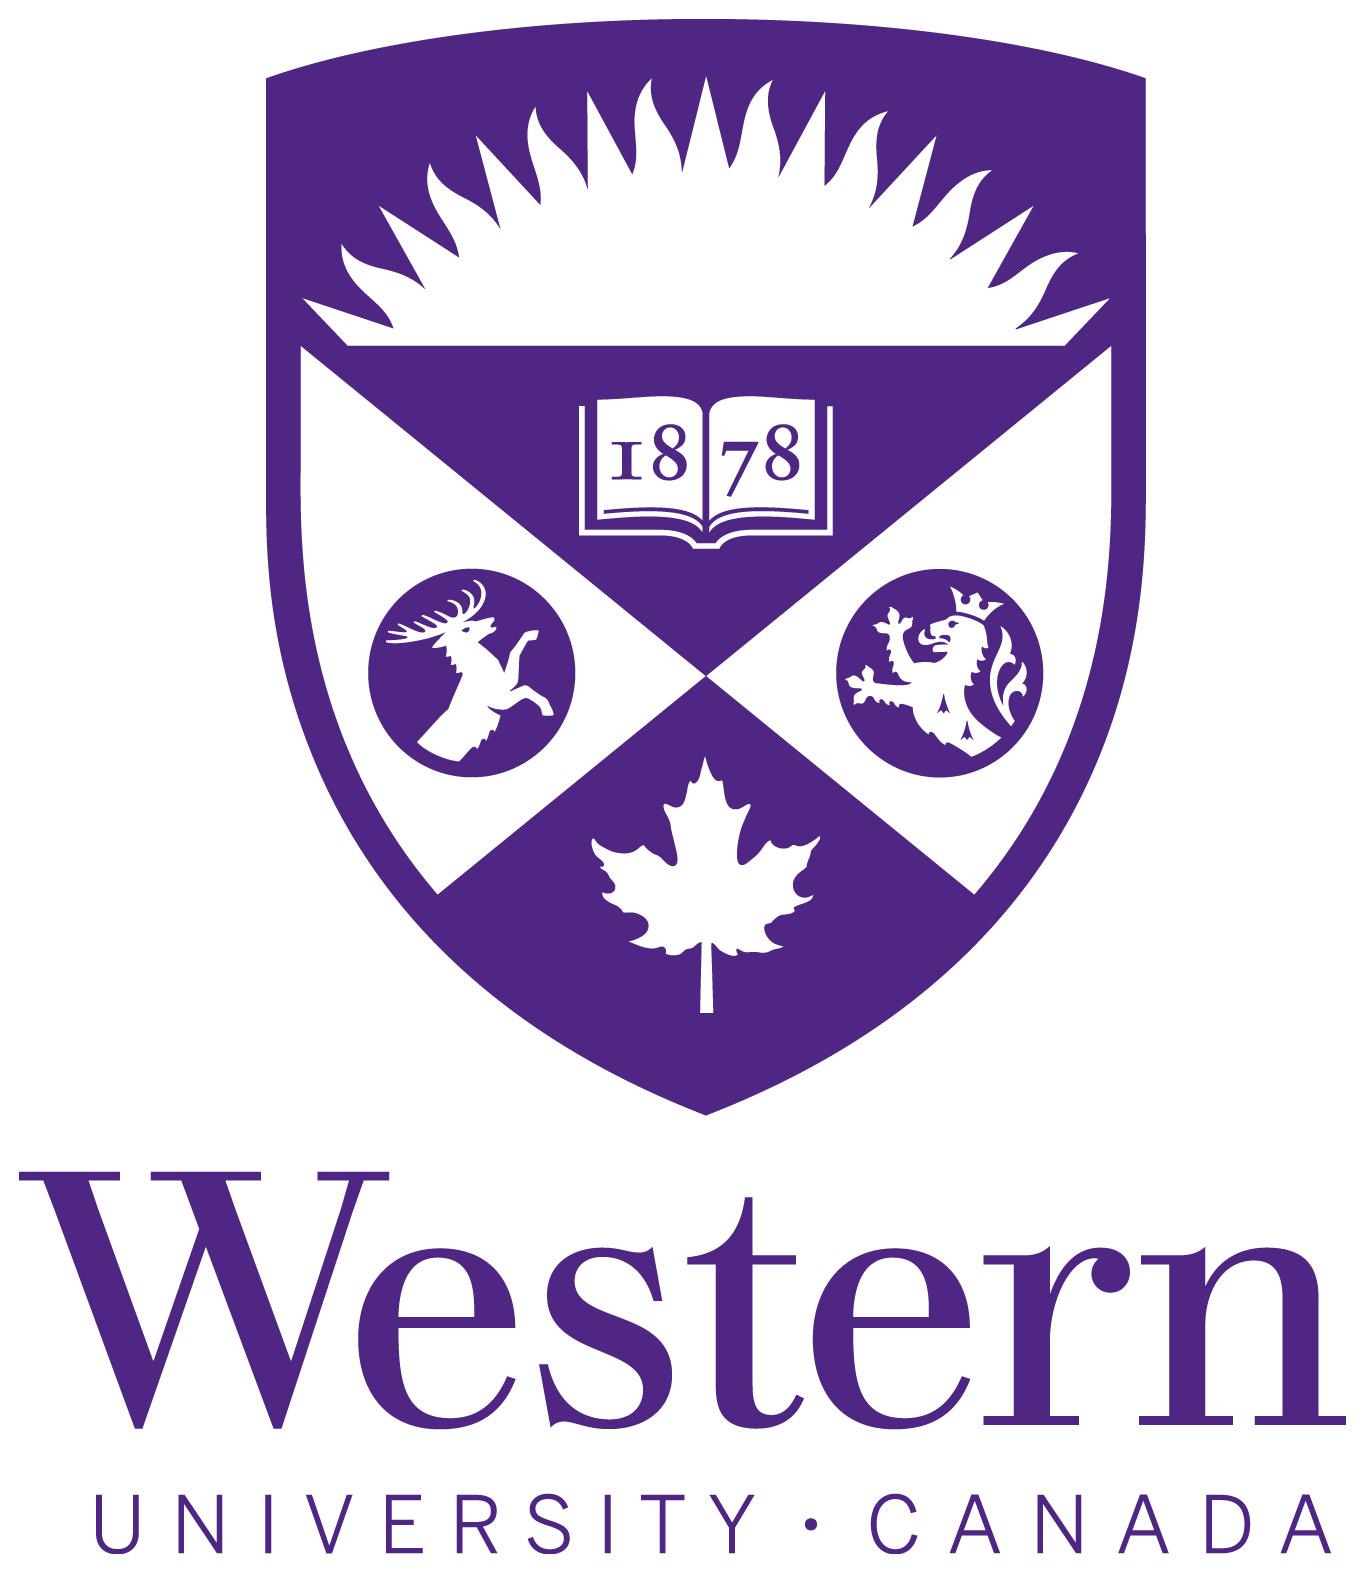 The Western University logo